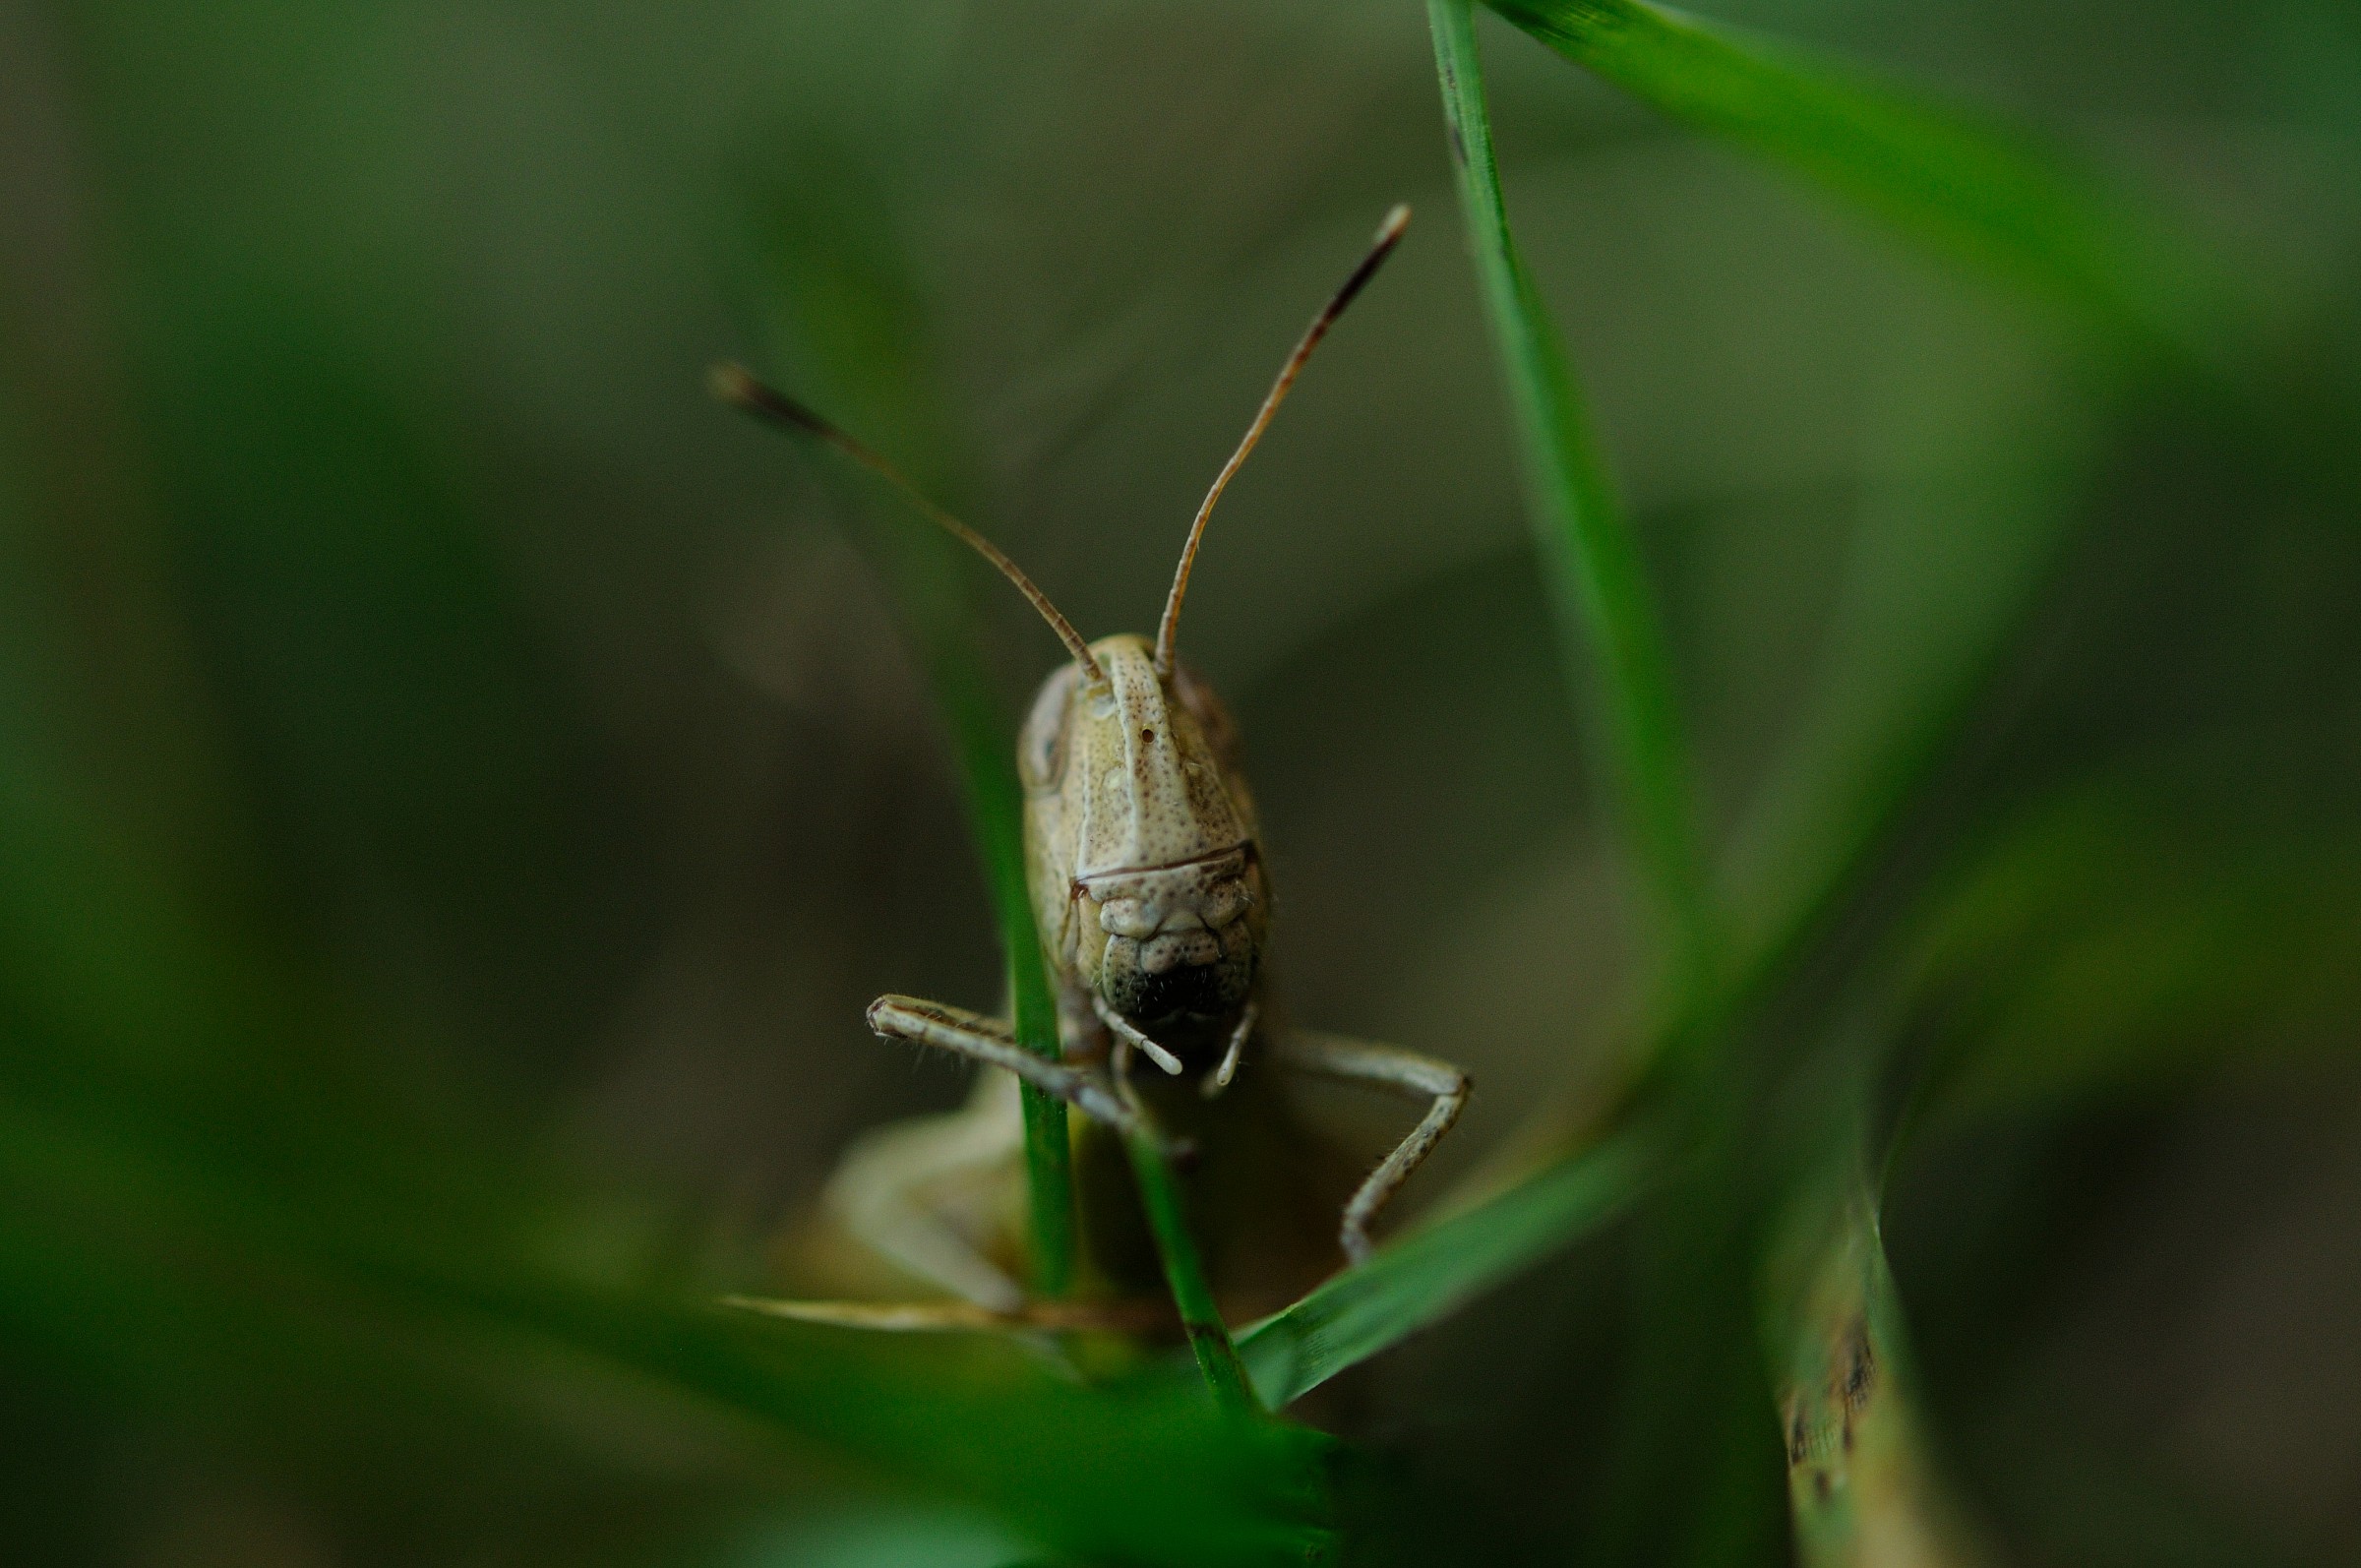 Grasshopper in the grass...